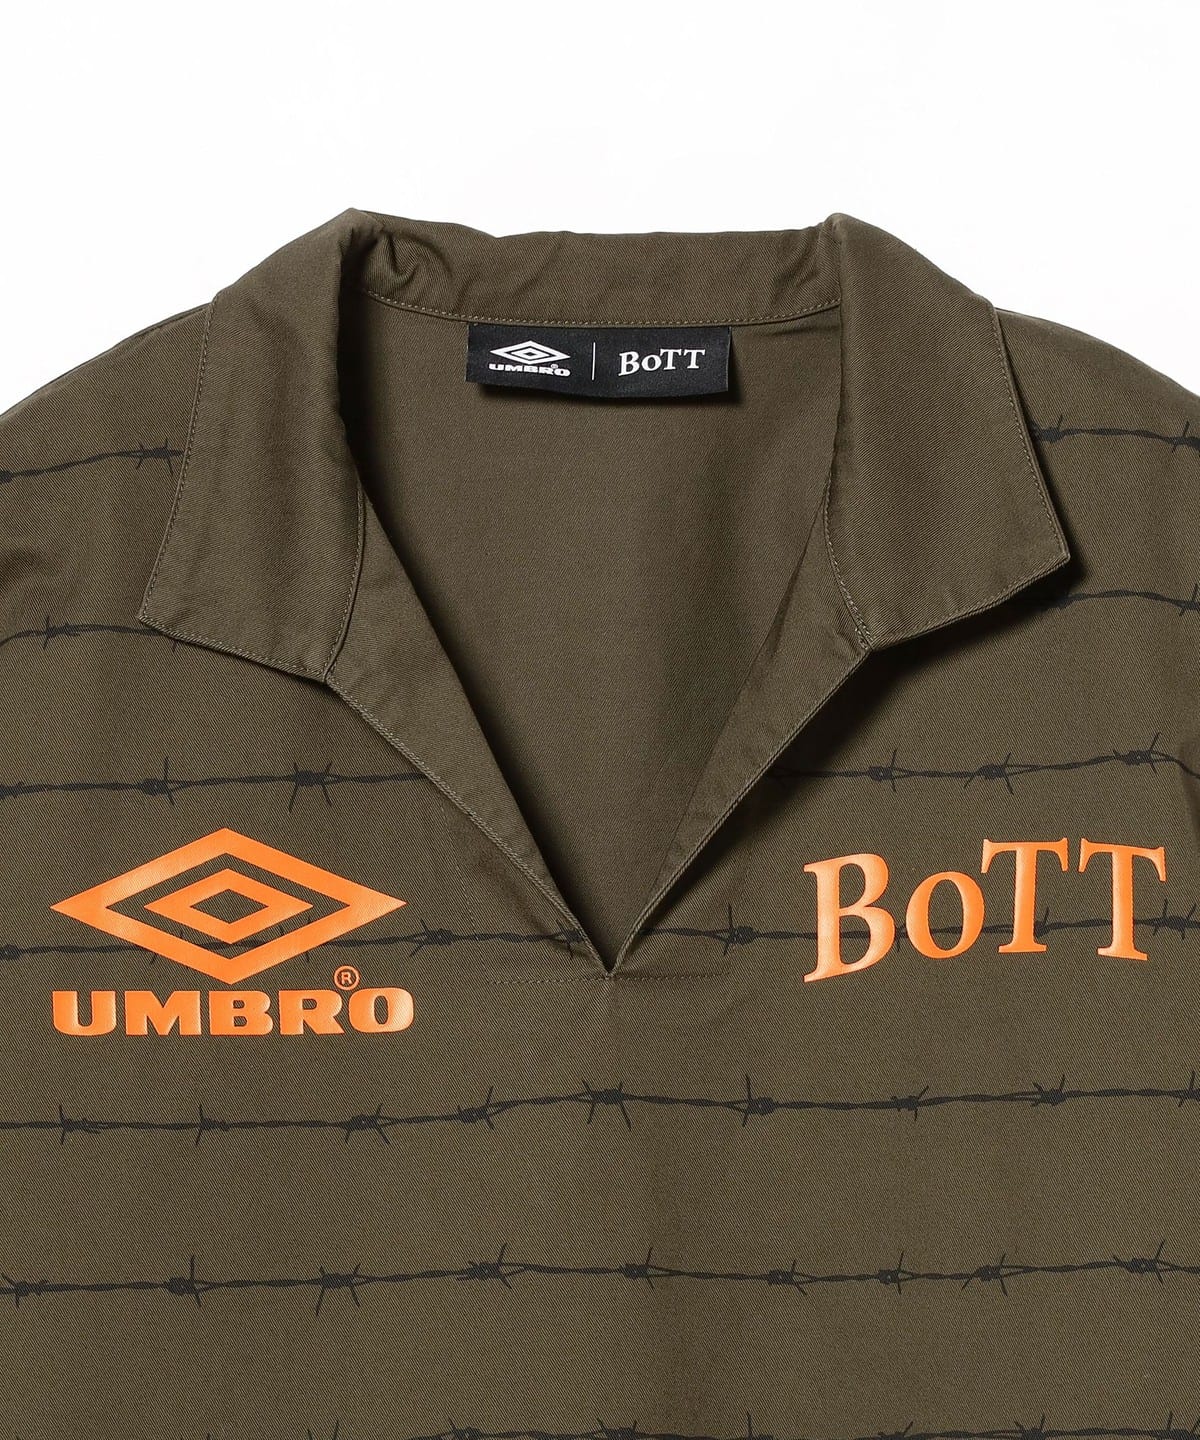 UMBRO  BoTT  BEAMST Pullover Shirt XLサイズサイズはXLとなります